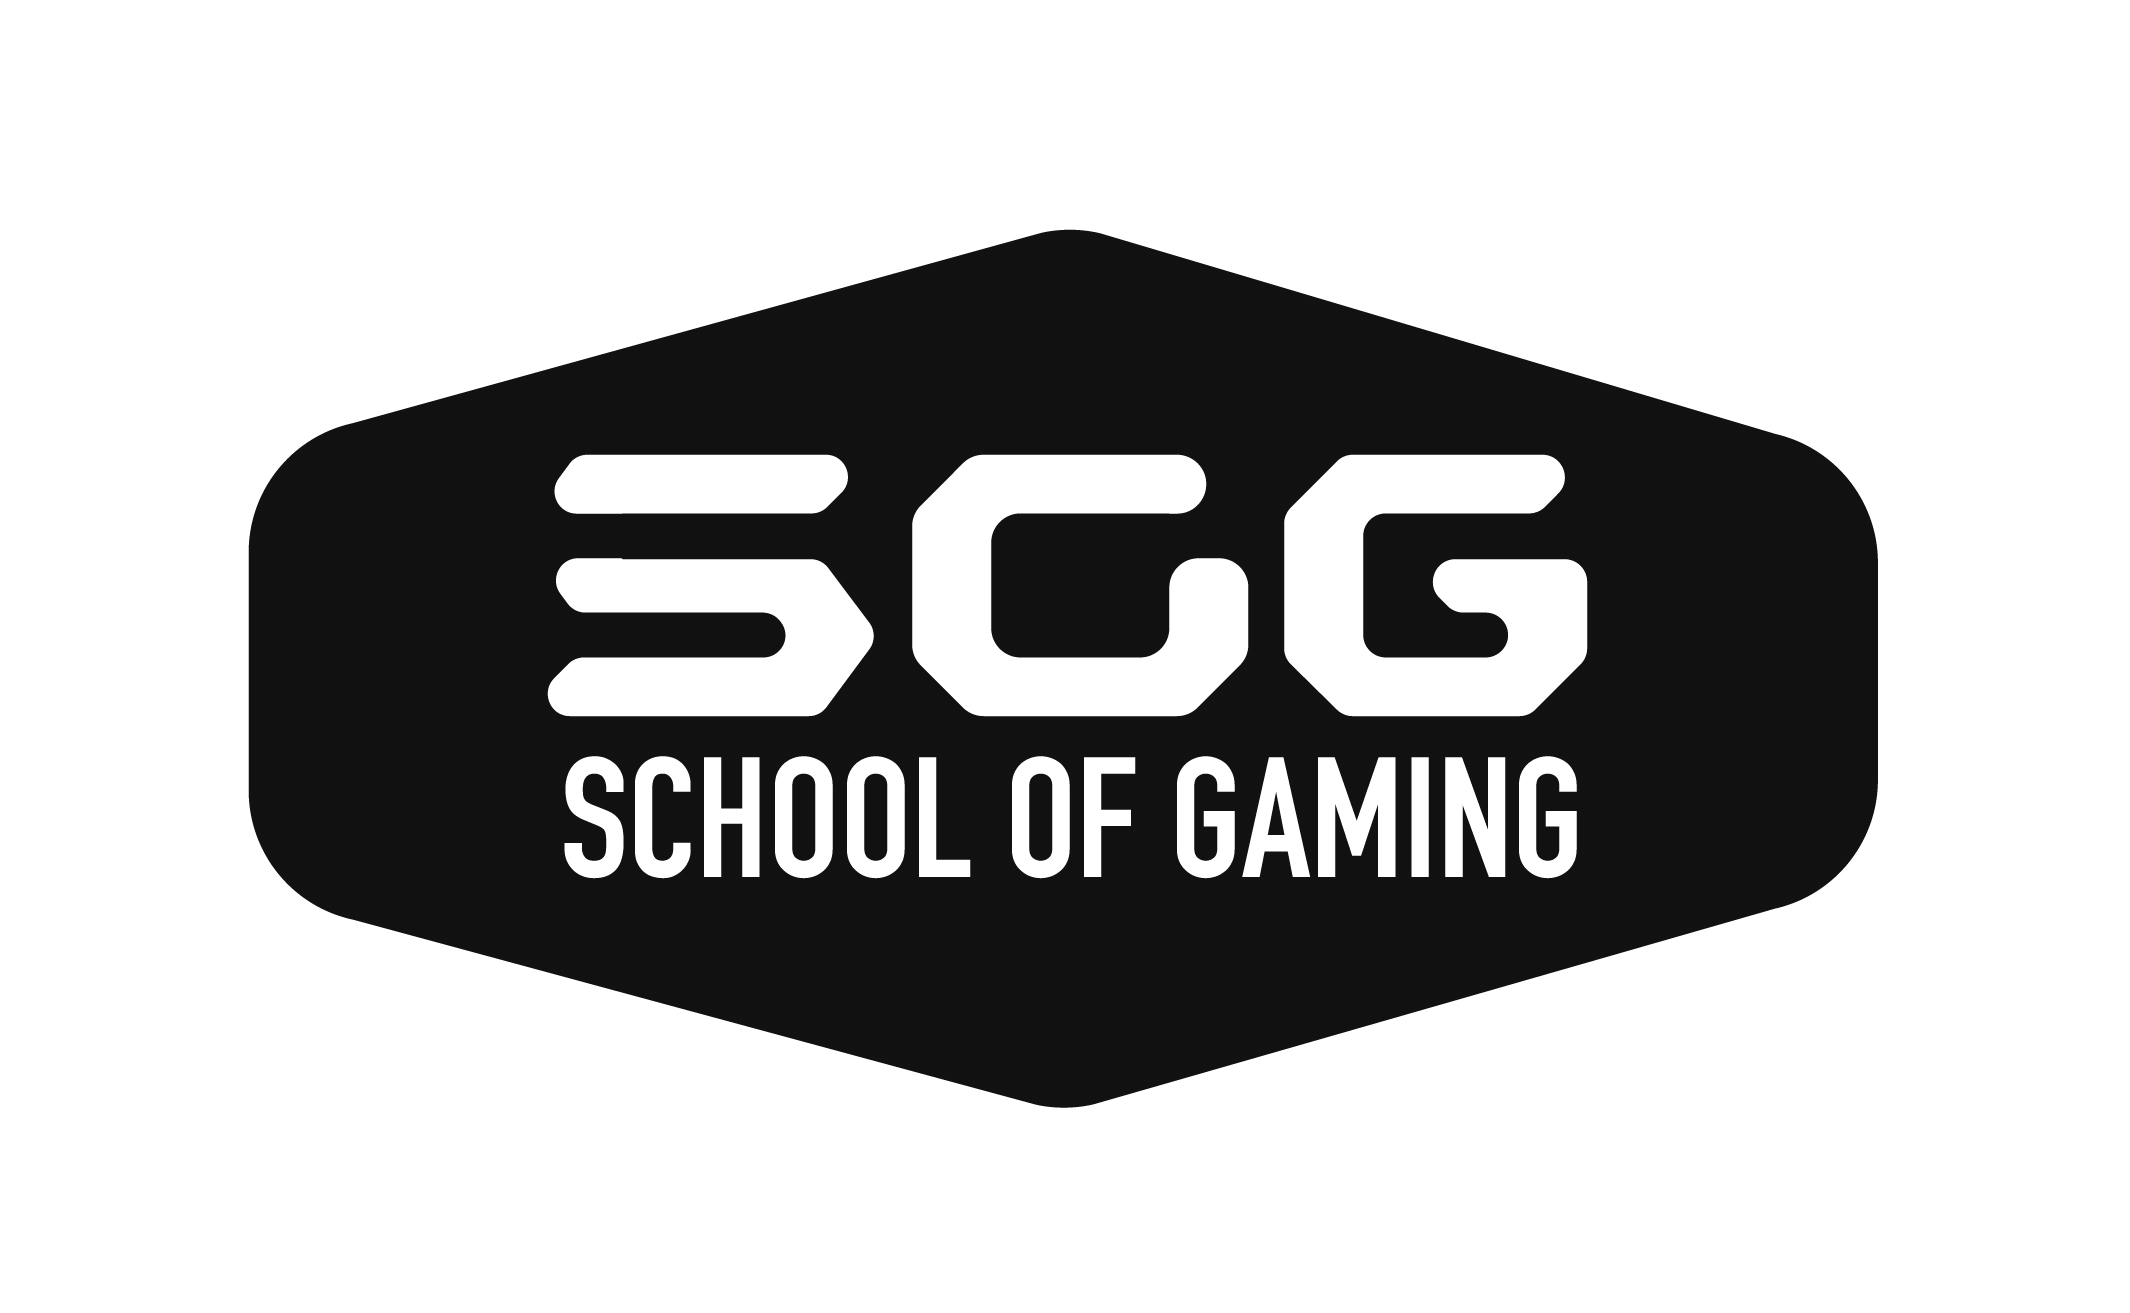 hexagonal logo school of gaming